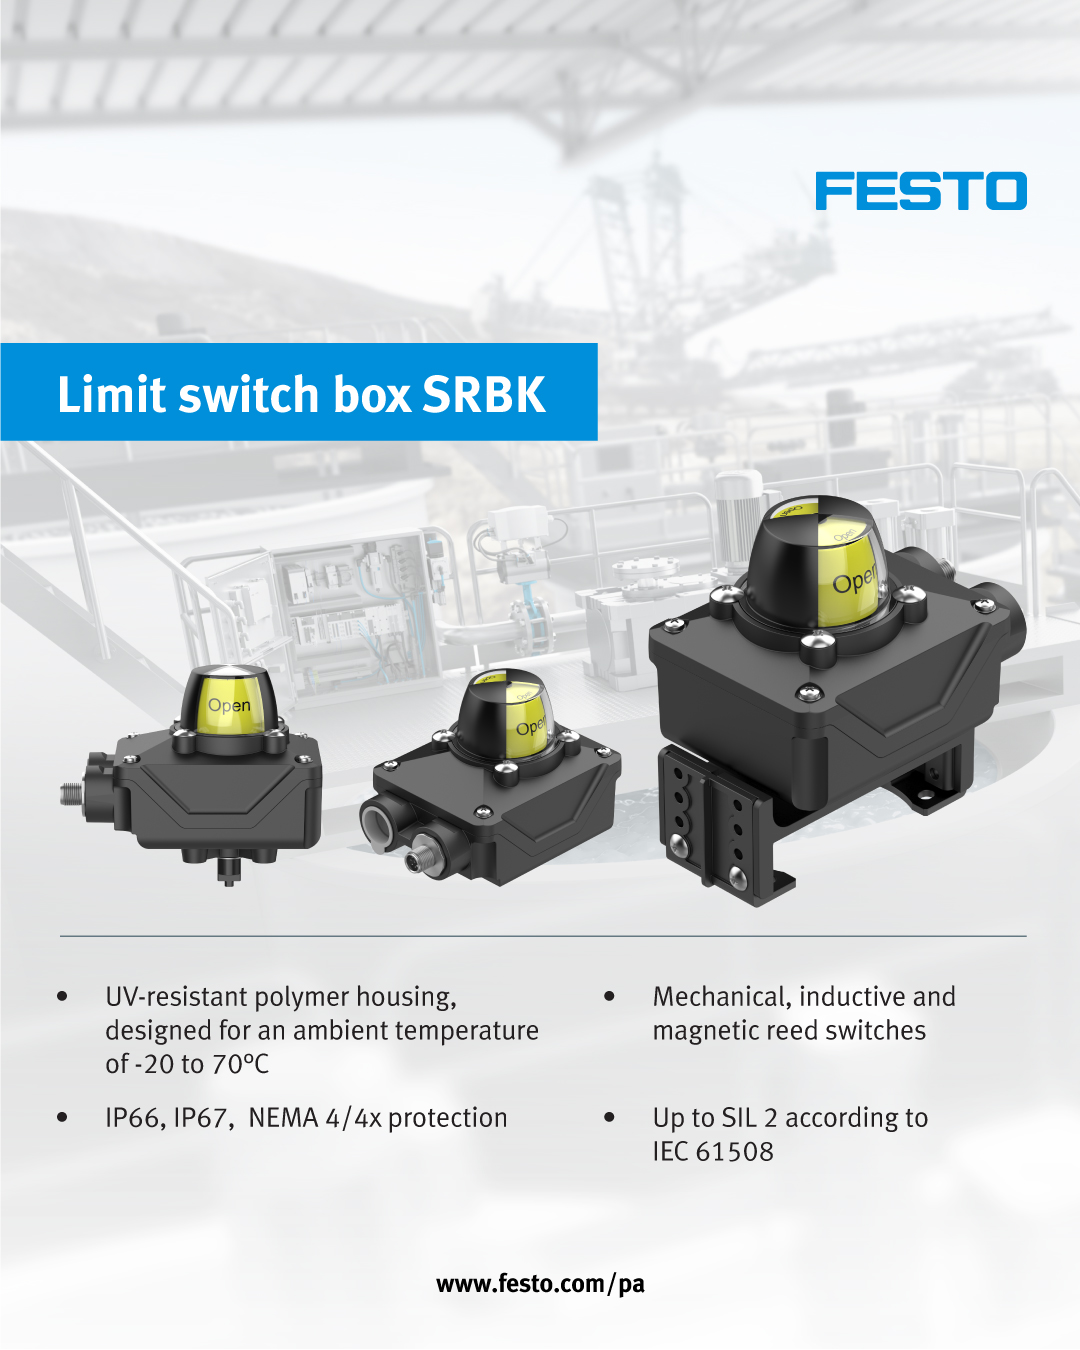 Festo SRBK Limit switch box